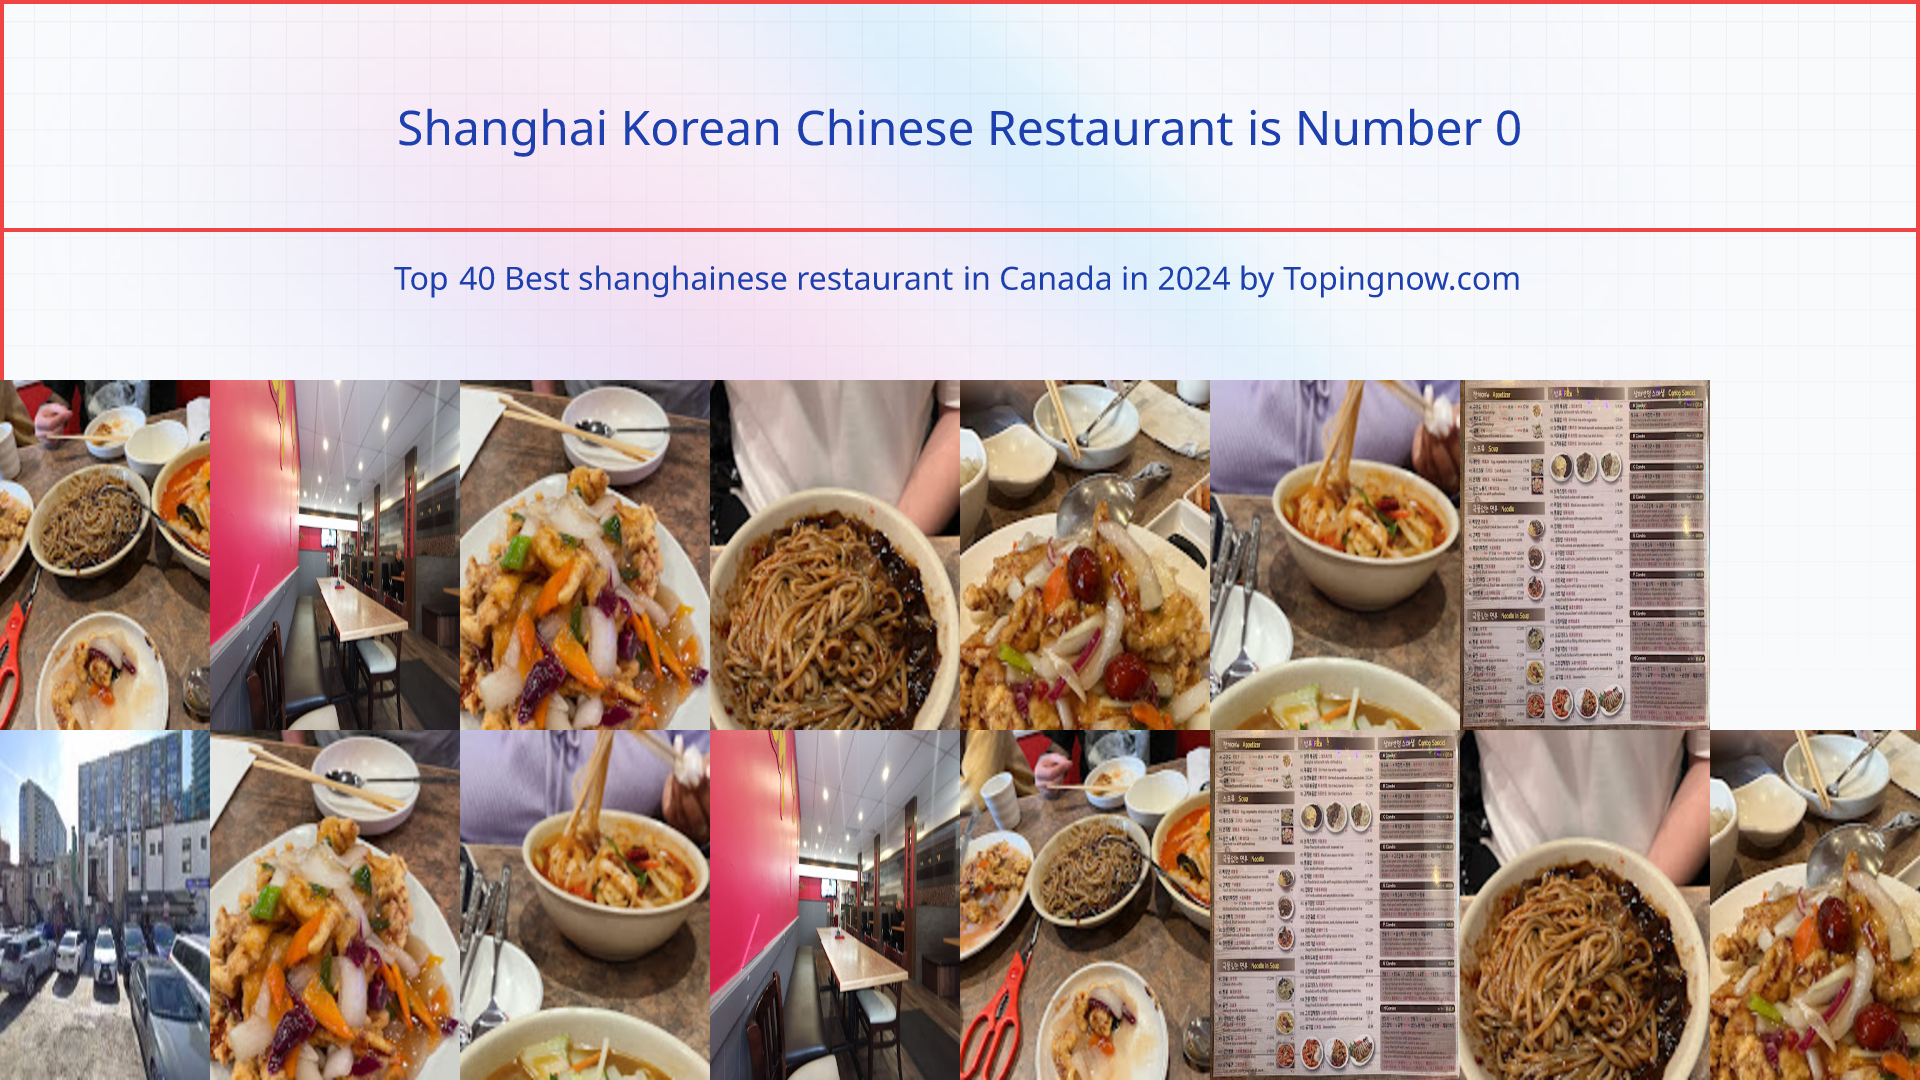 Shanghai Korean Chinese Restaurant: Top 40 Best shanghainese restaurant in Canada in 2024